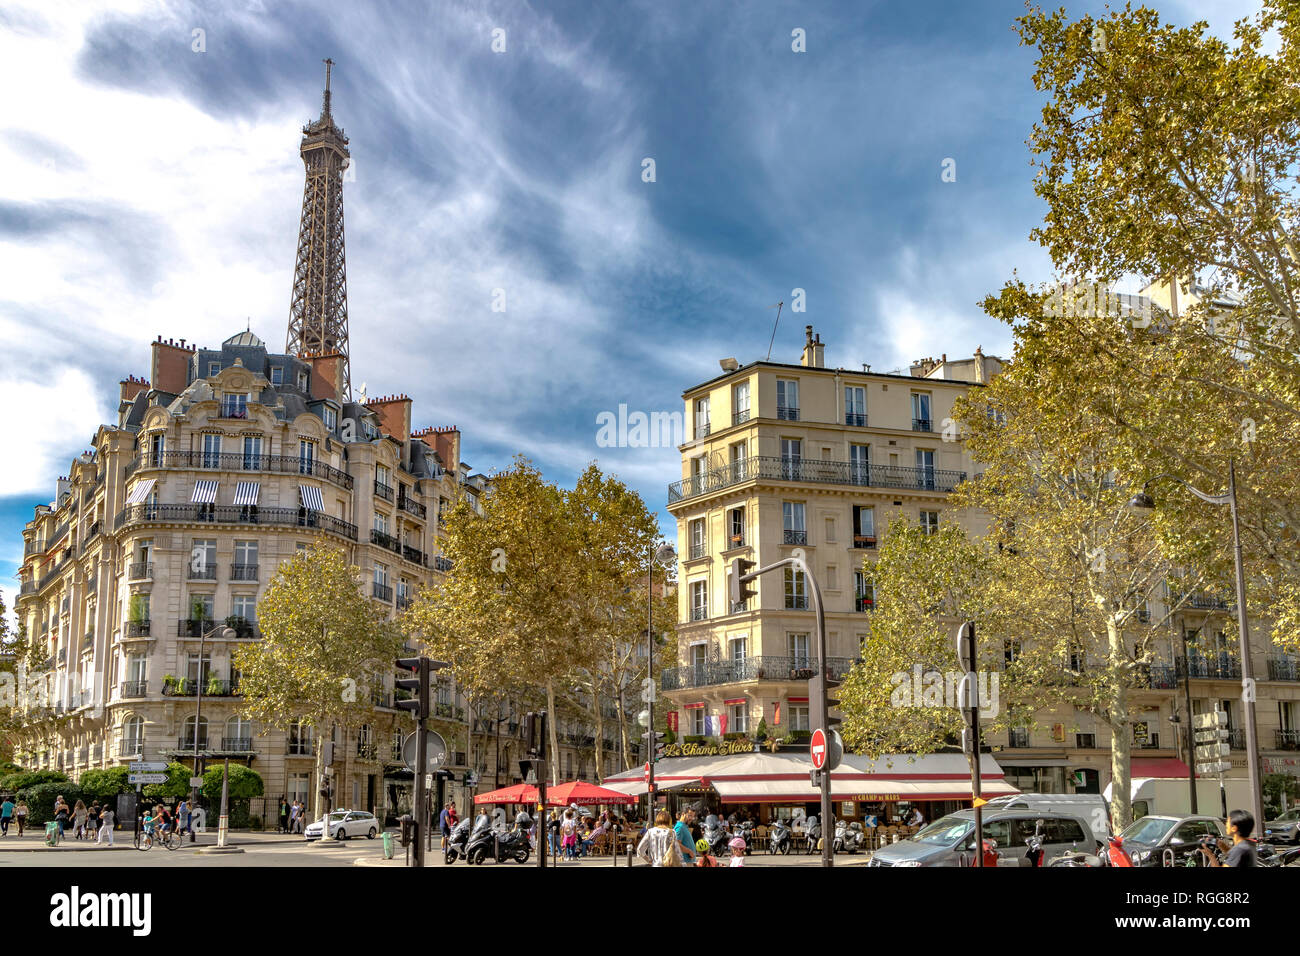 The Eiffel Tower rises above elegant Parisian apartment buildings with iron balconies in 7th arrondissement of Paris Stock Photo